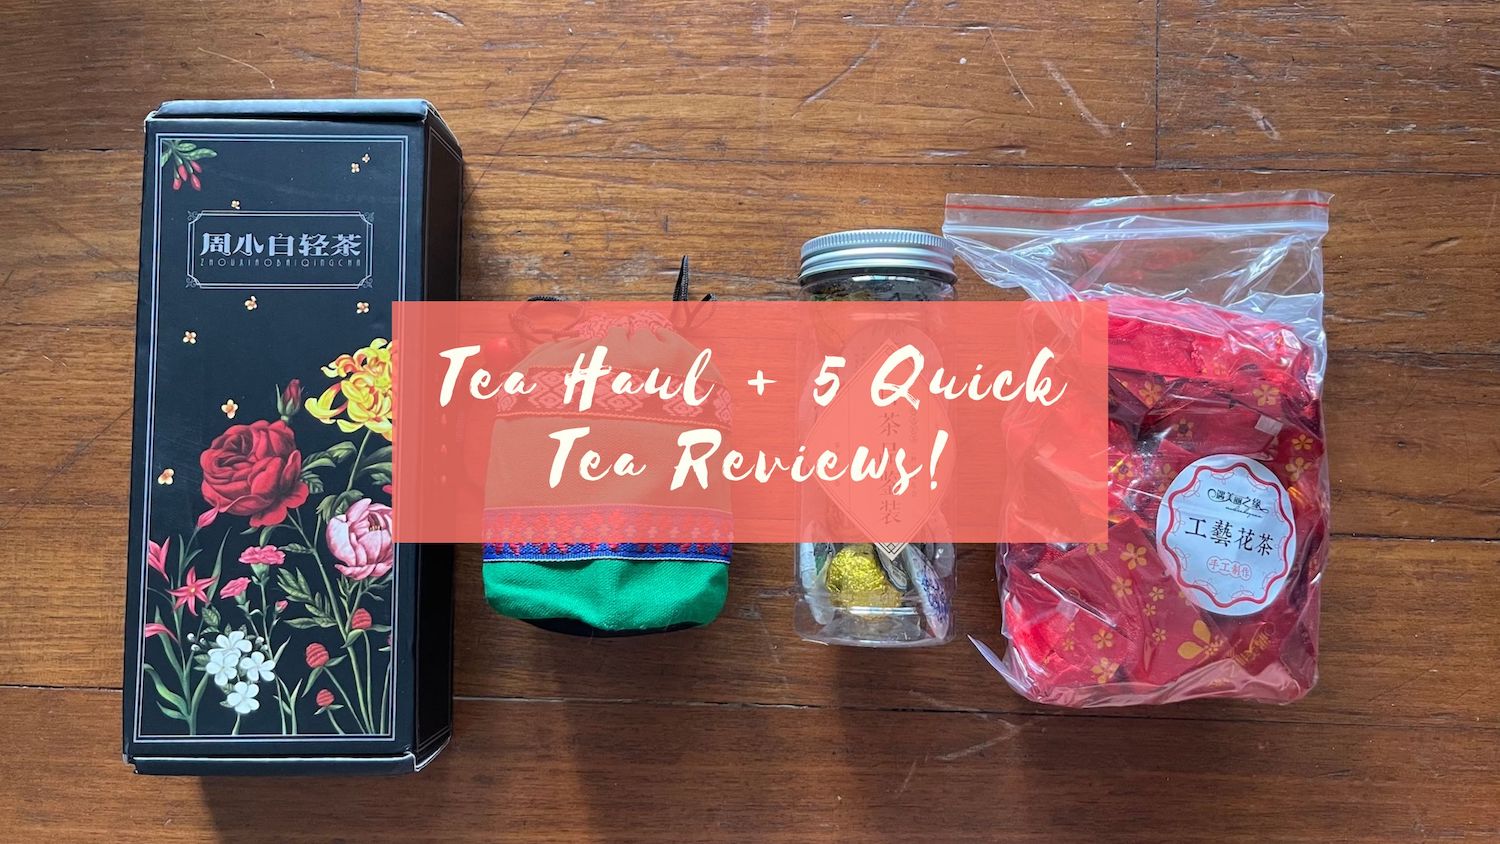 Golden Black Tea - Mountain Rose Herbs (Full review in comment) : r/tea